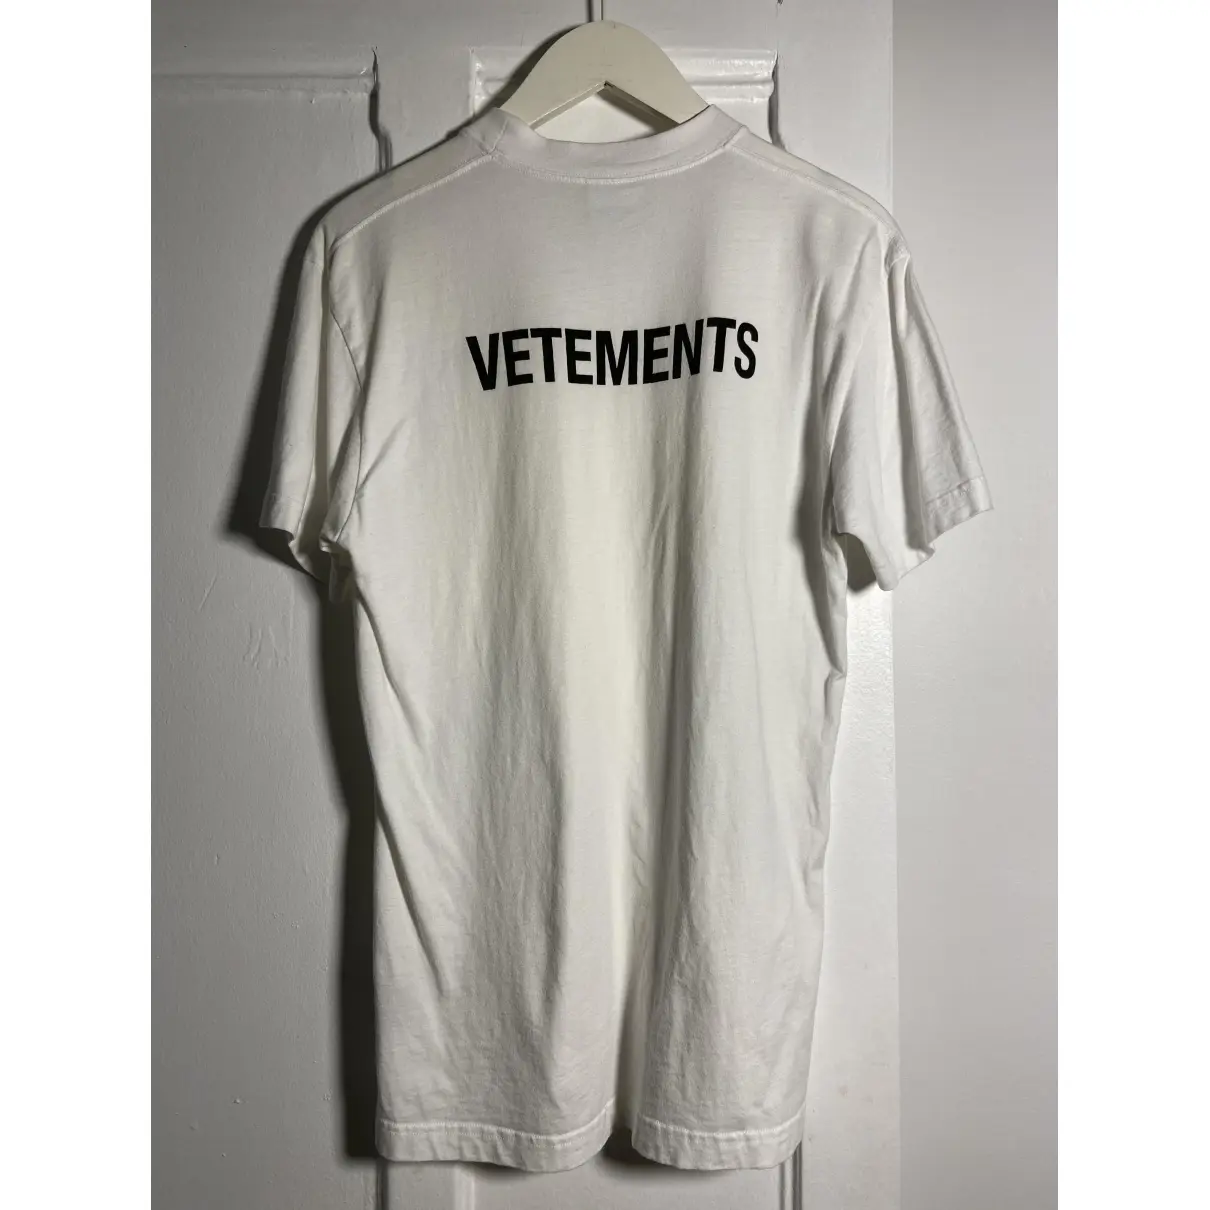 Buy Vetements White Cotton T-shirt online